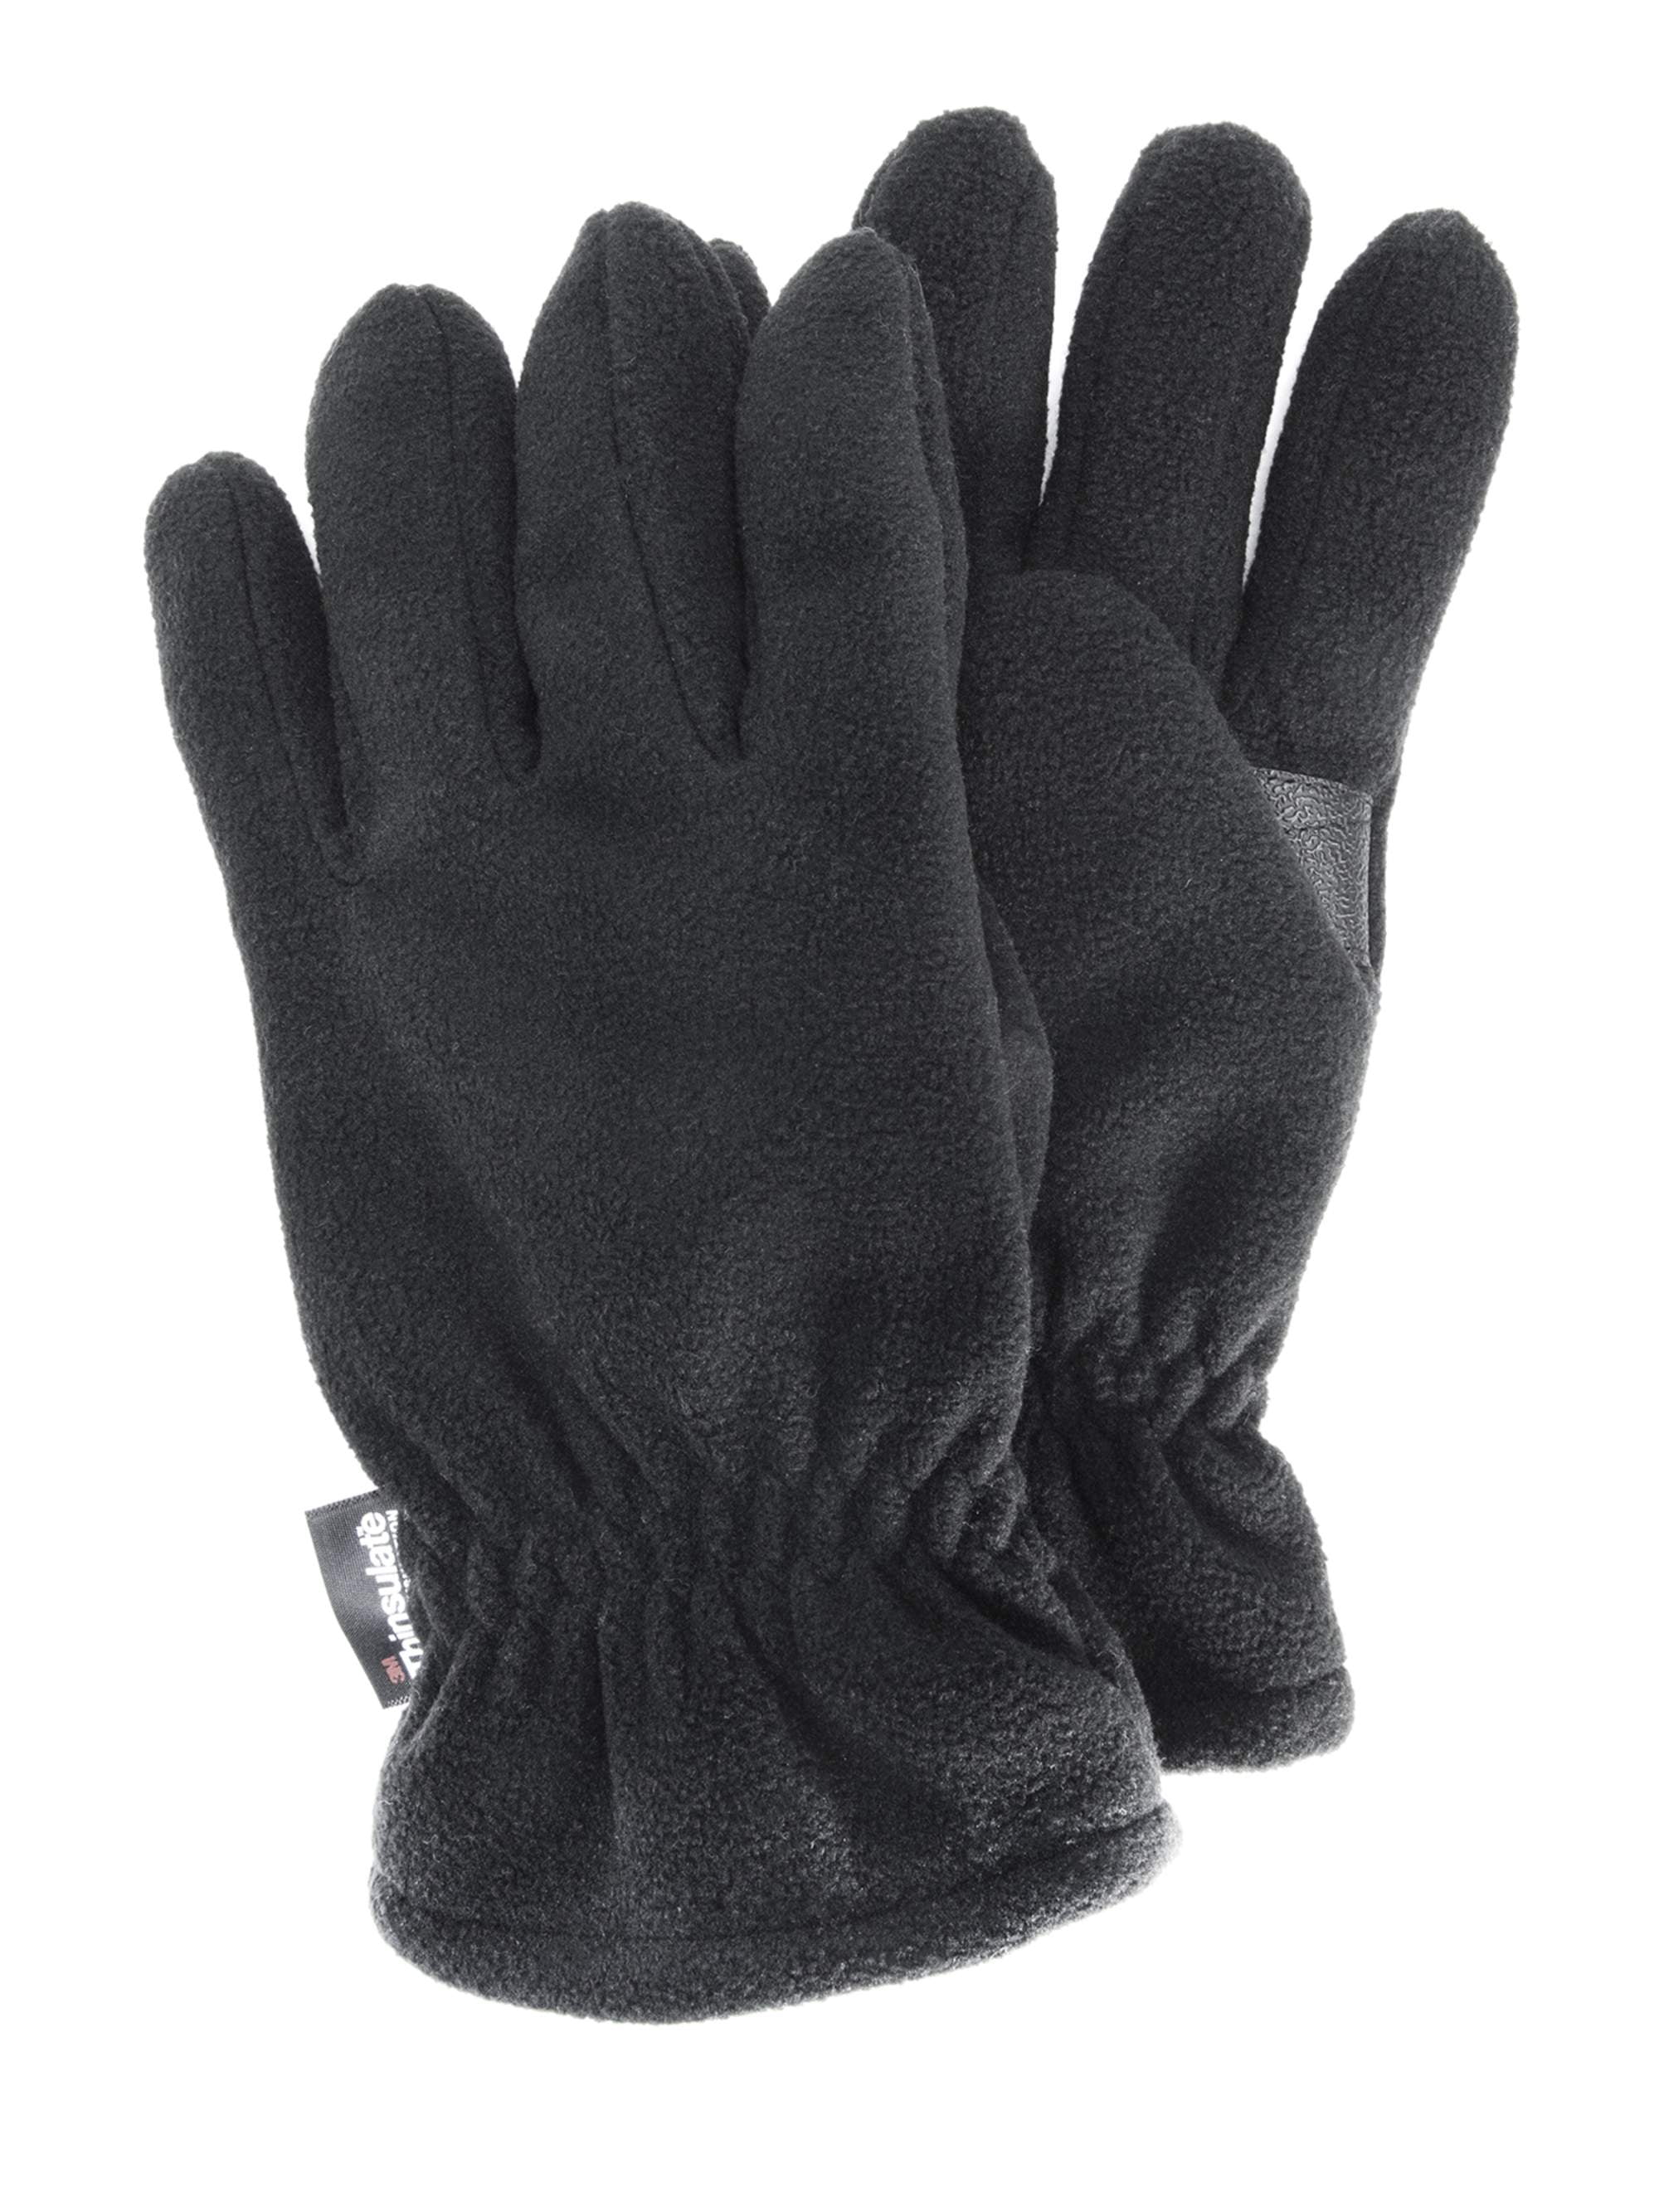 Regatta Men's Thinsulate Fleece Gloves